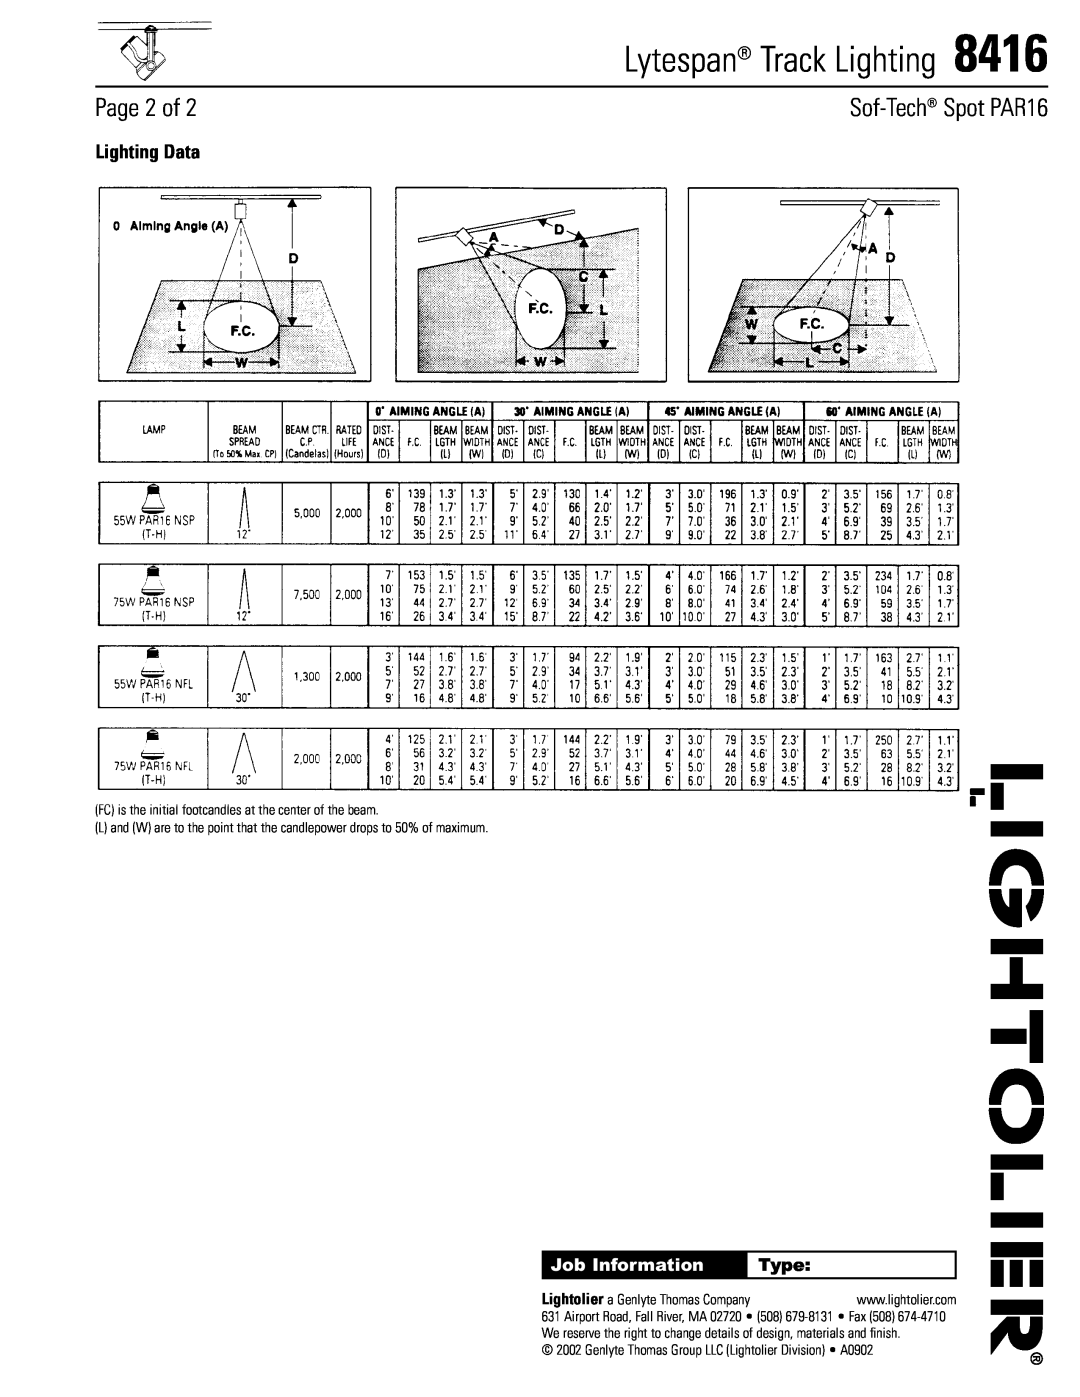 Lightolier 8416 manual Page 2 of, Lighting Data, Type, Lytespan Track Lighting, Sof-Tech Spot PAR16, Job Information 